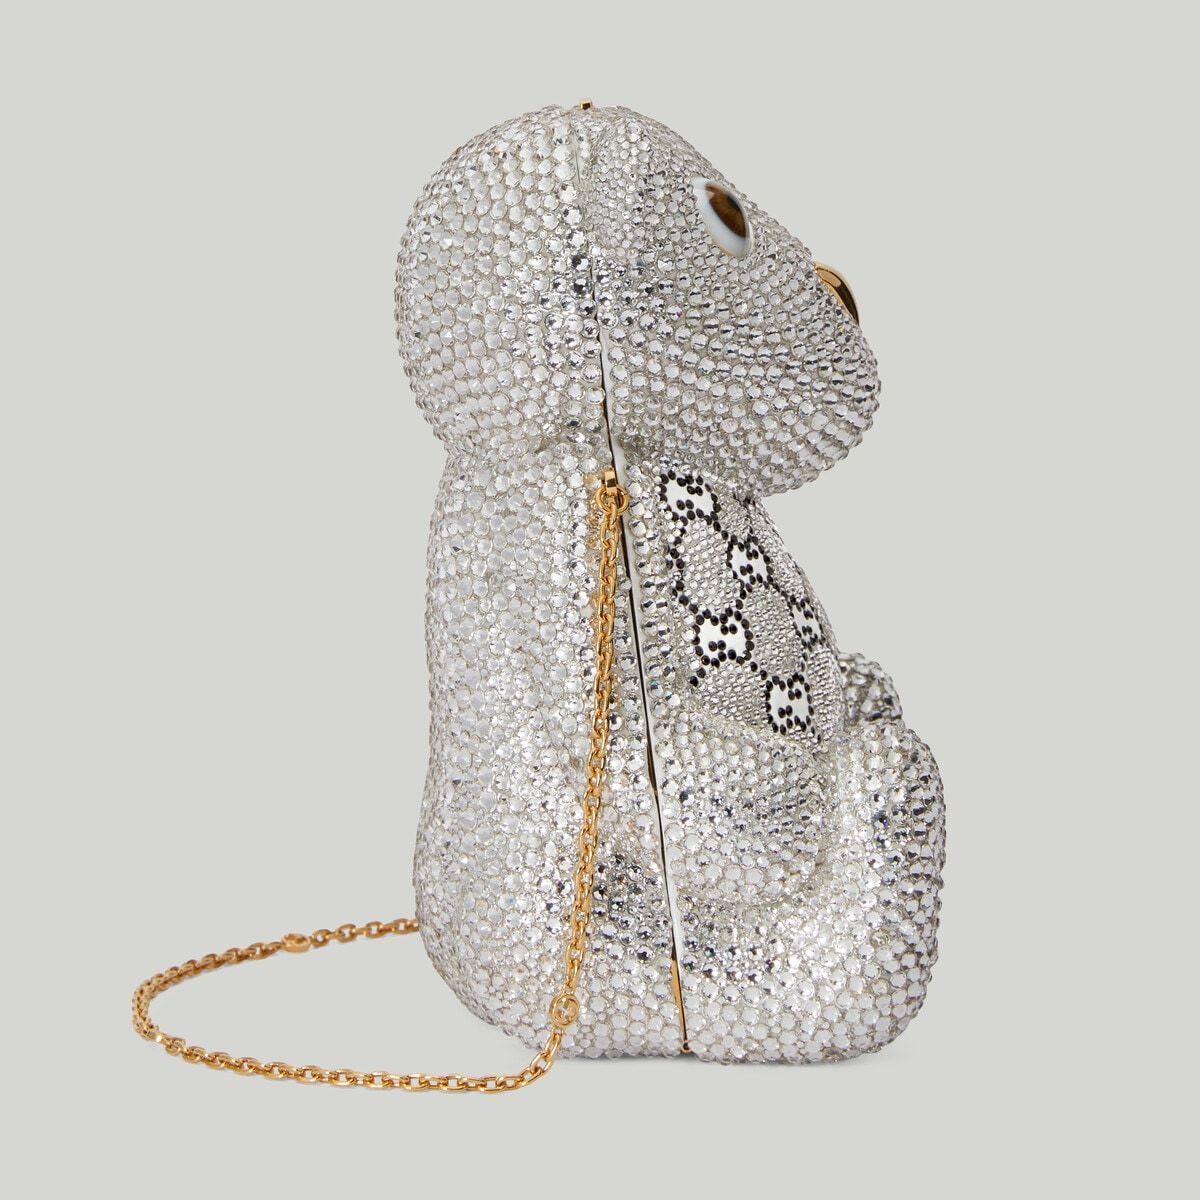 Gucci launches Teddy bear-shaped Minaudière bags